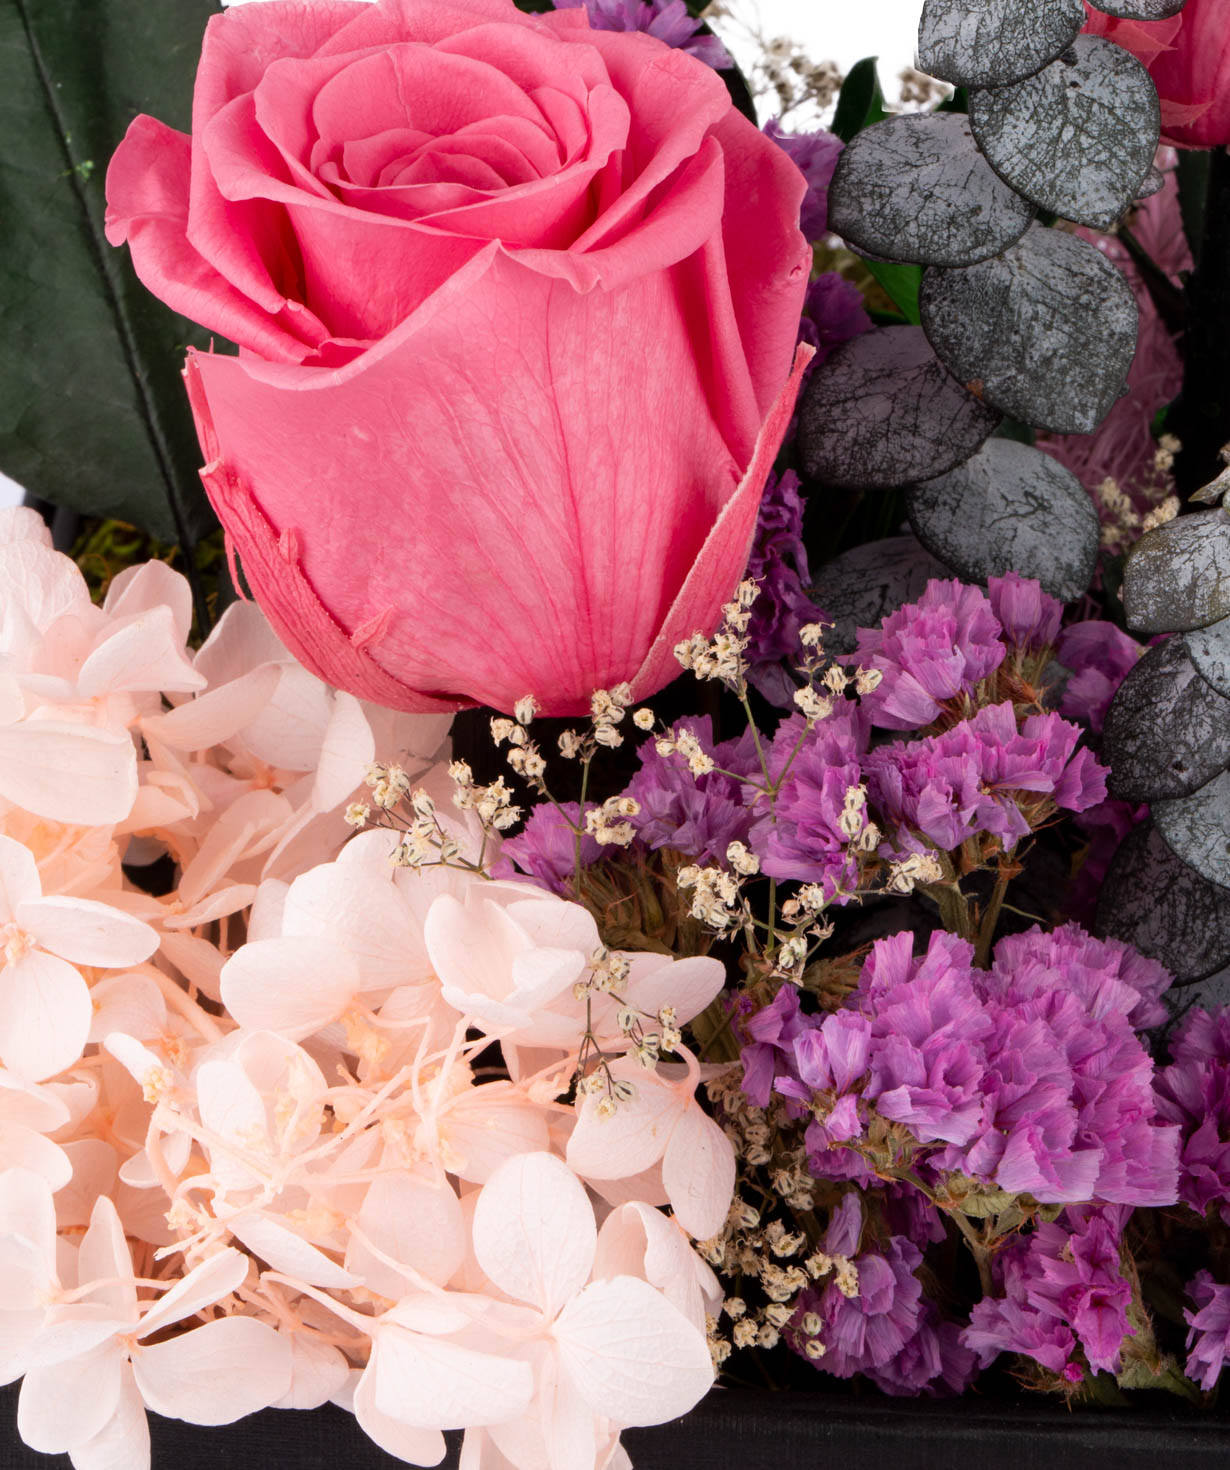 Arrangement `EM Flowers` with eternal roses and hydrangeas